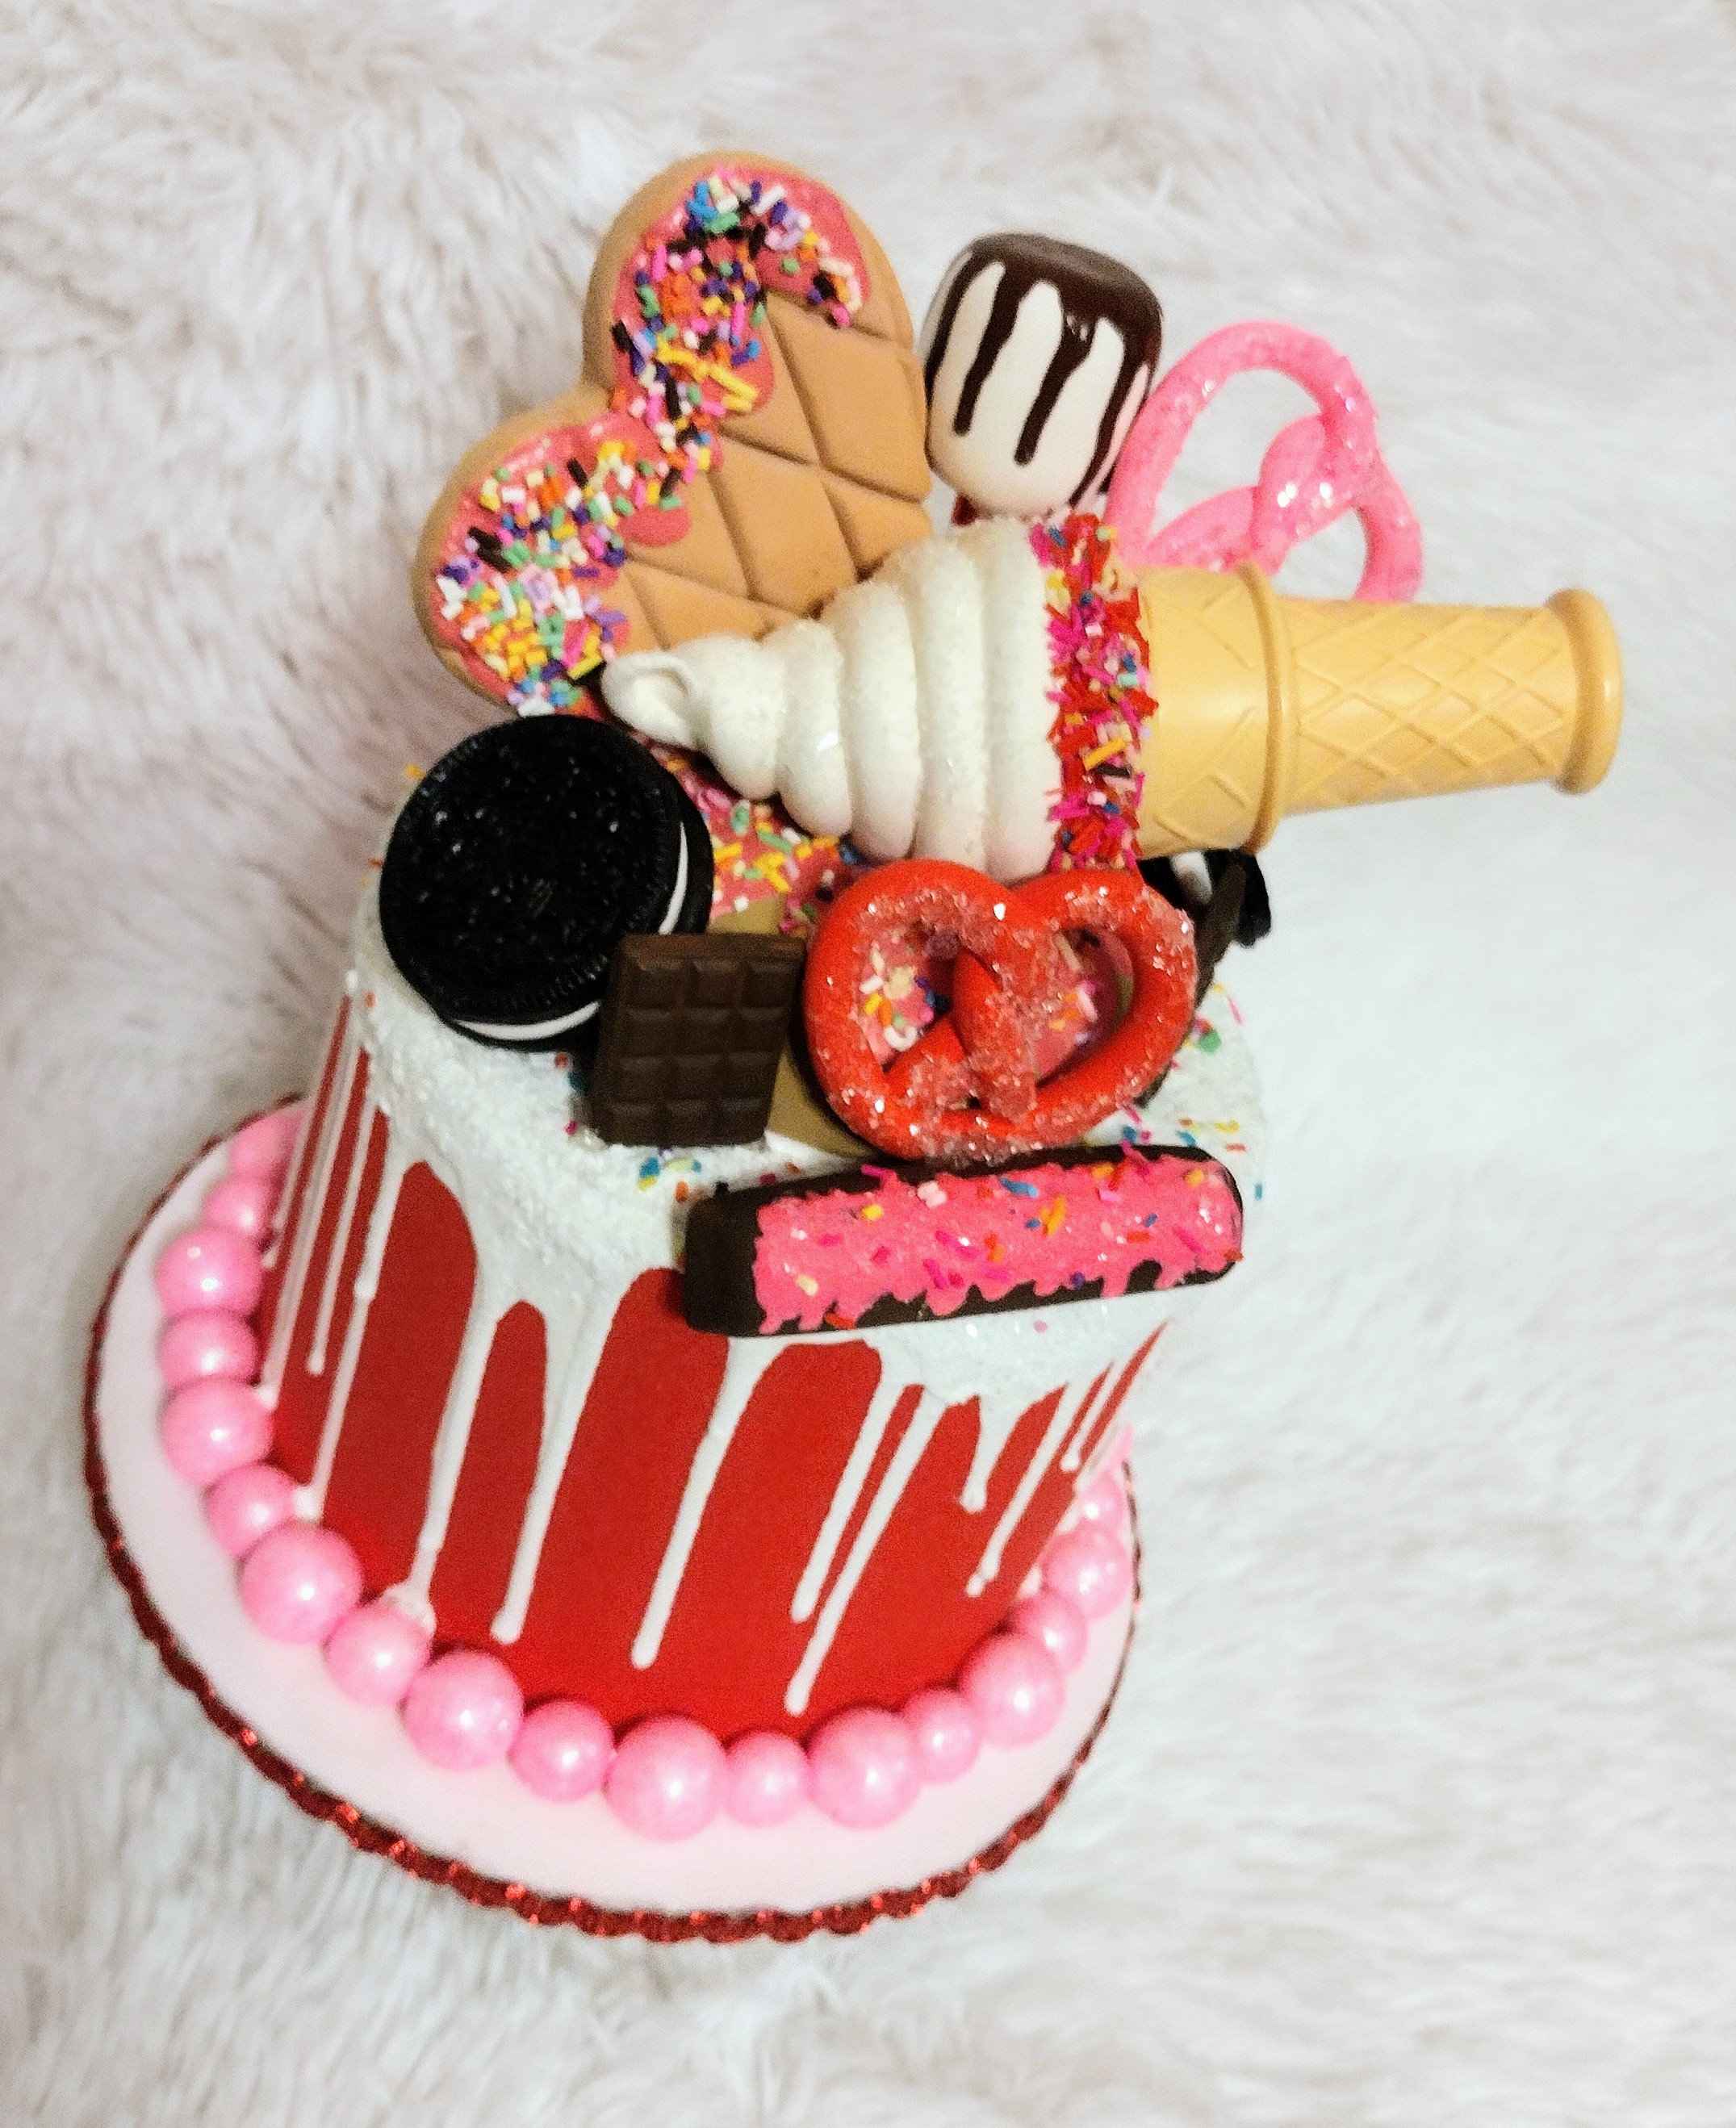 props doughnut cake faux ice cream cake candy land faux desserts faux Valentine's cake Valentine's cake ice cream cake photo prop